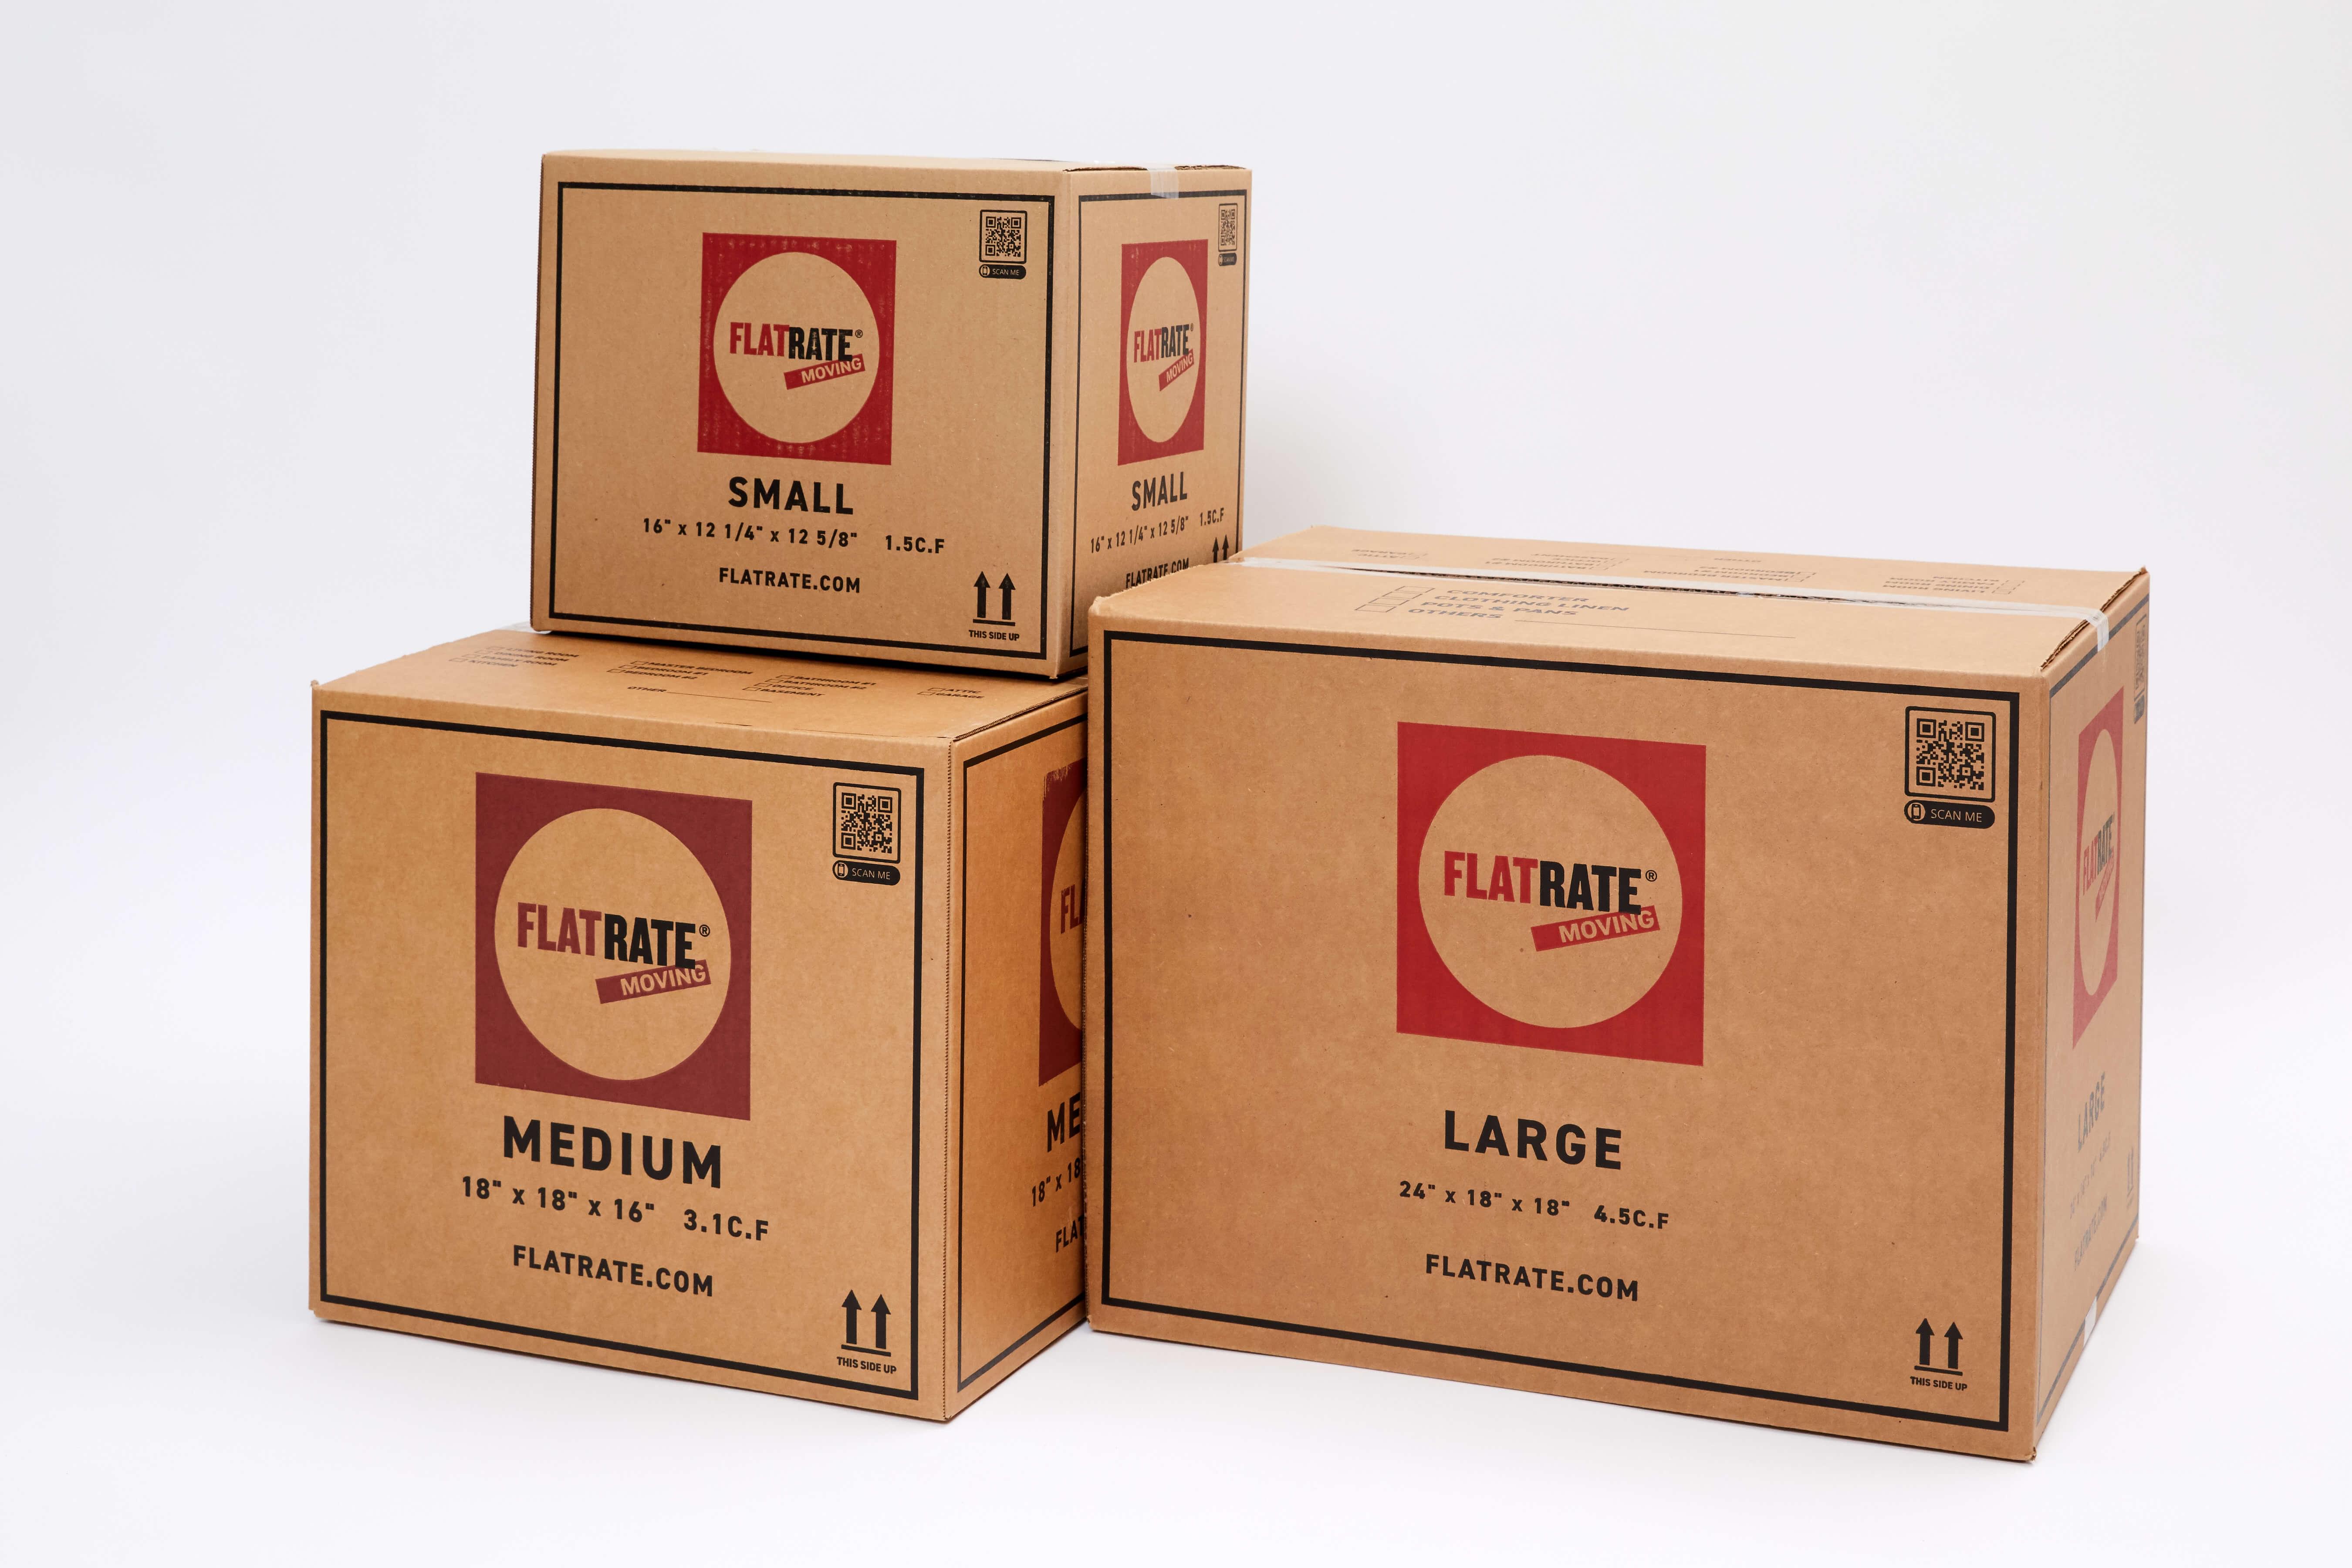 Moving Kits, Moving Box Kits in Stock - ULINE